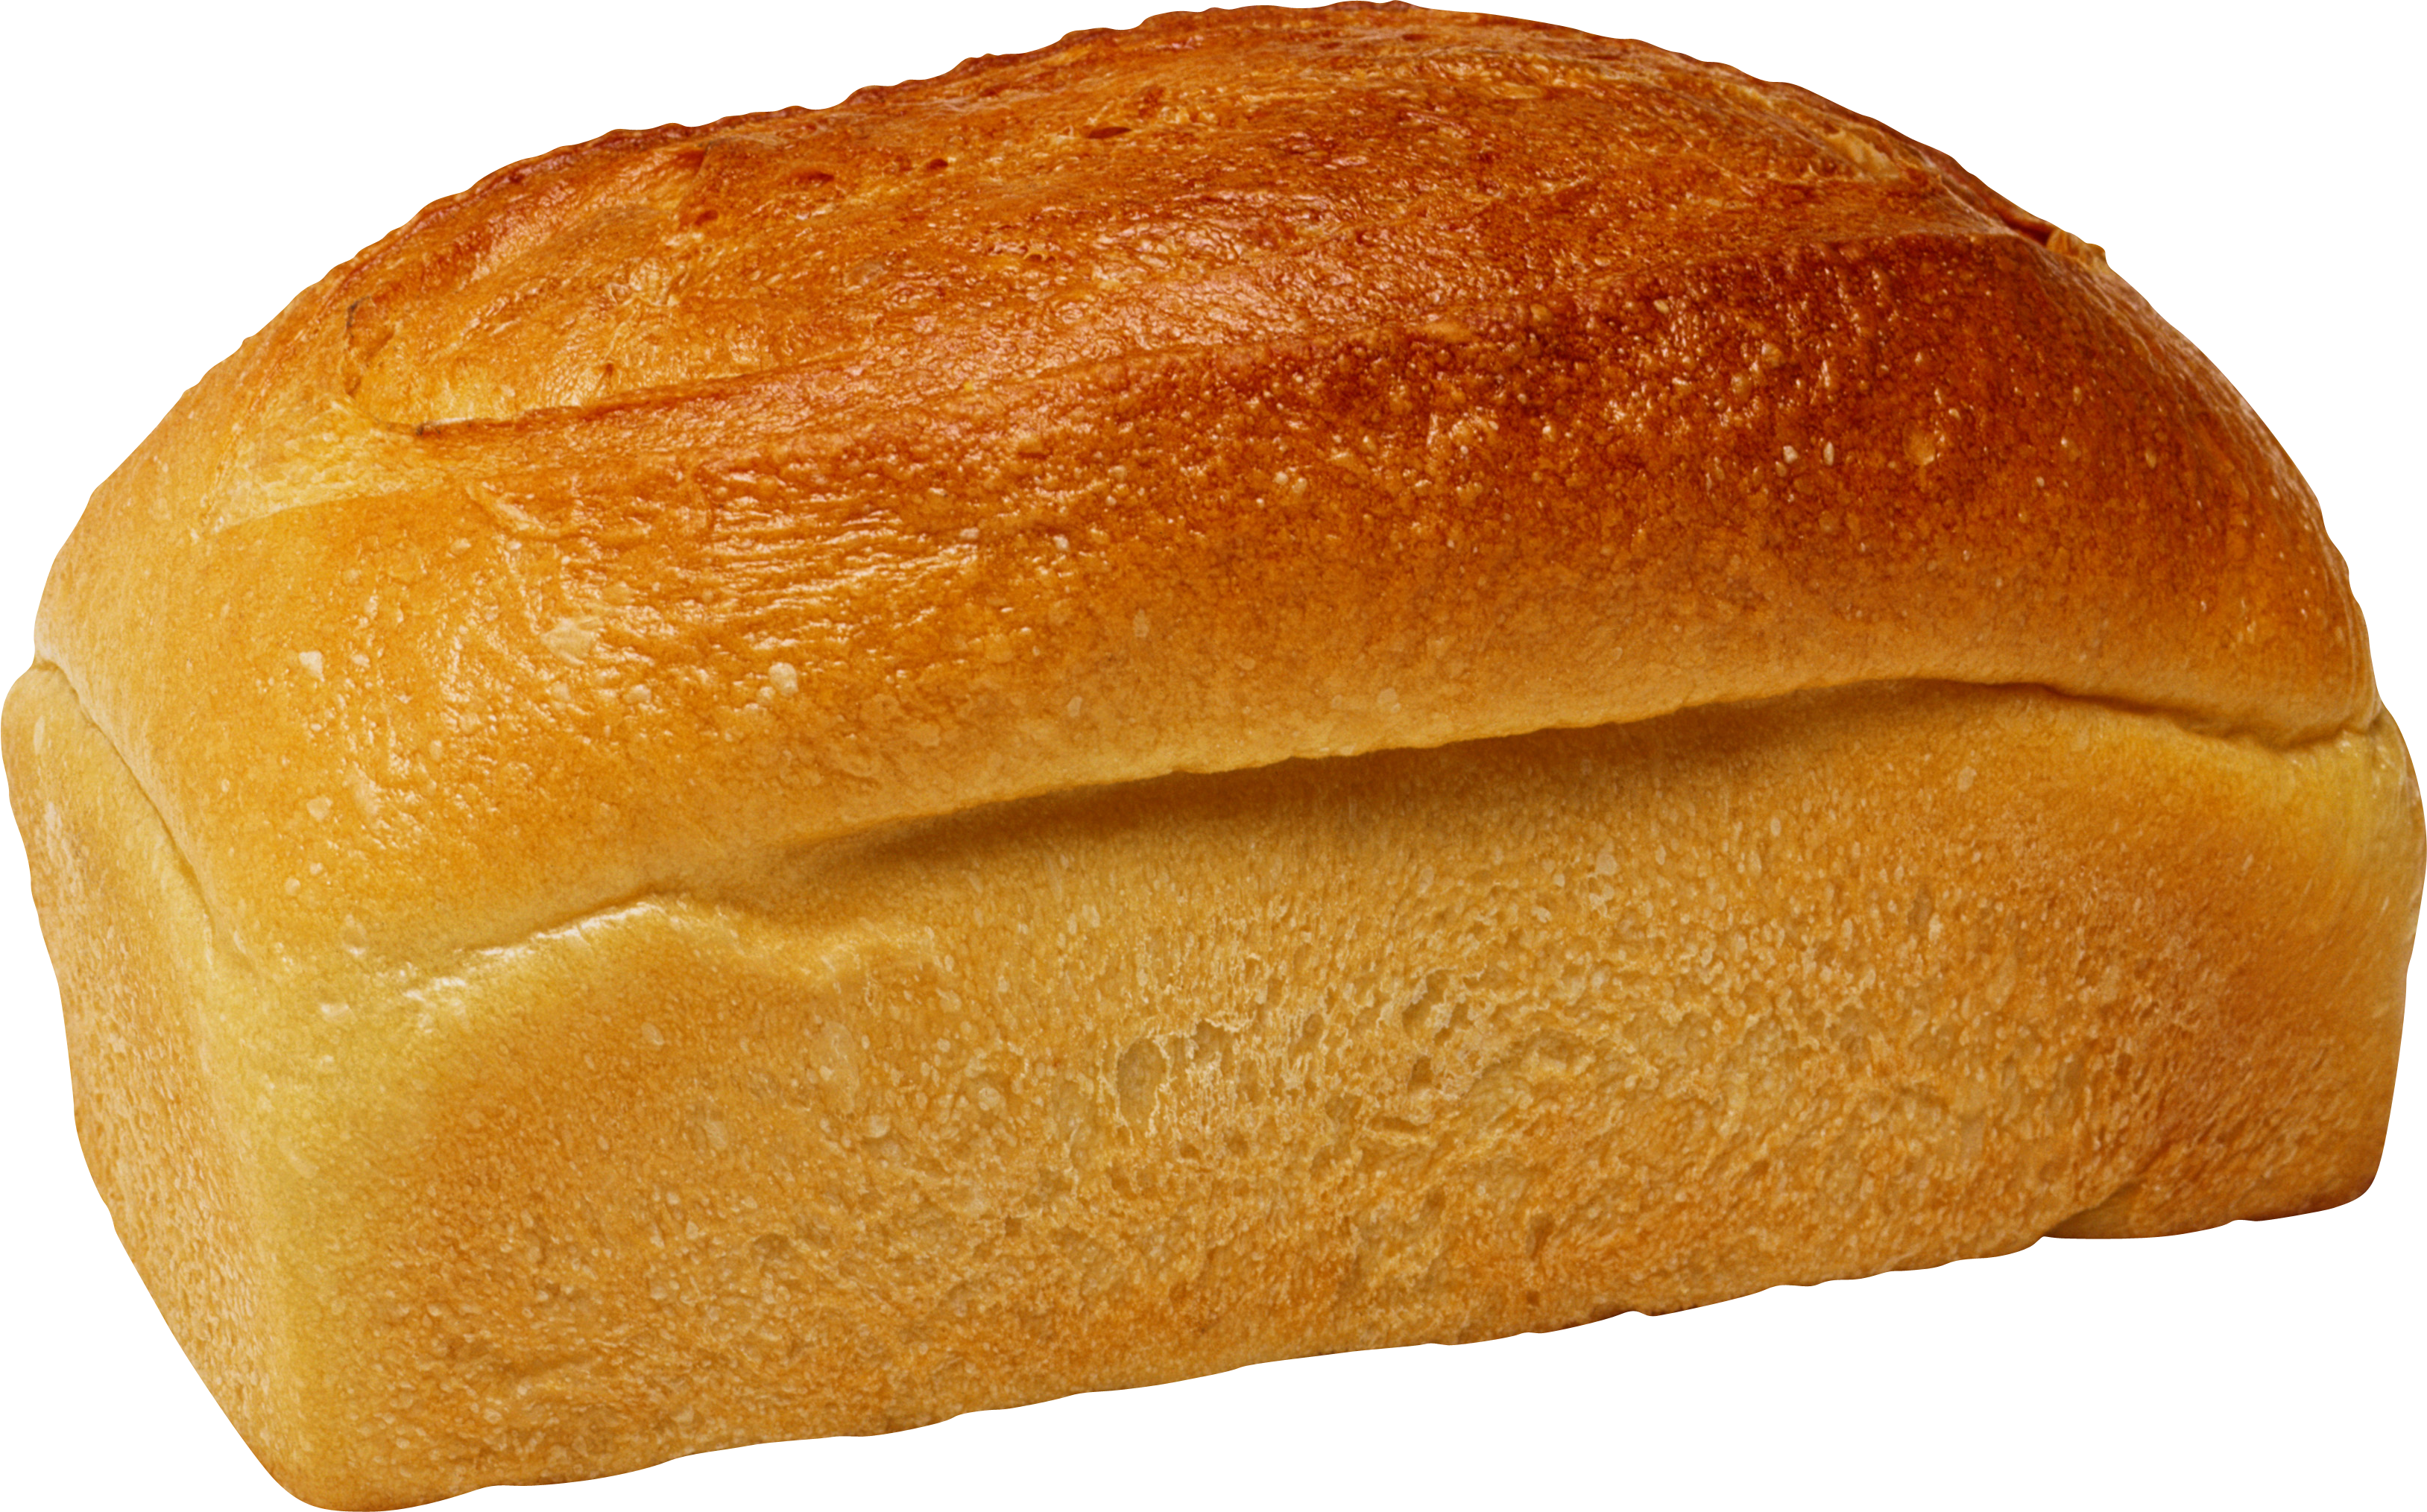 Bread, Food, Gastronomy, Bake